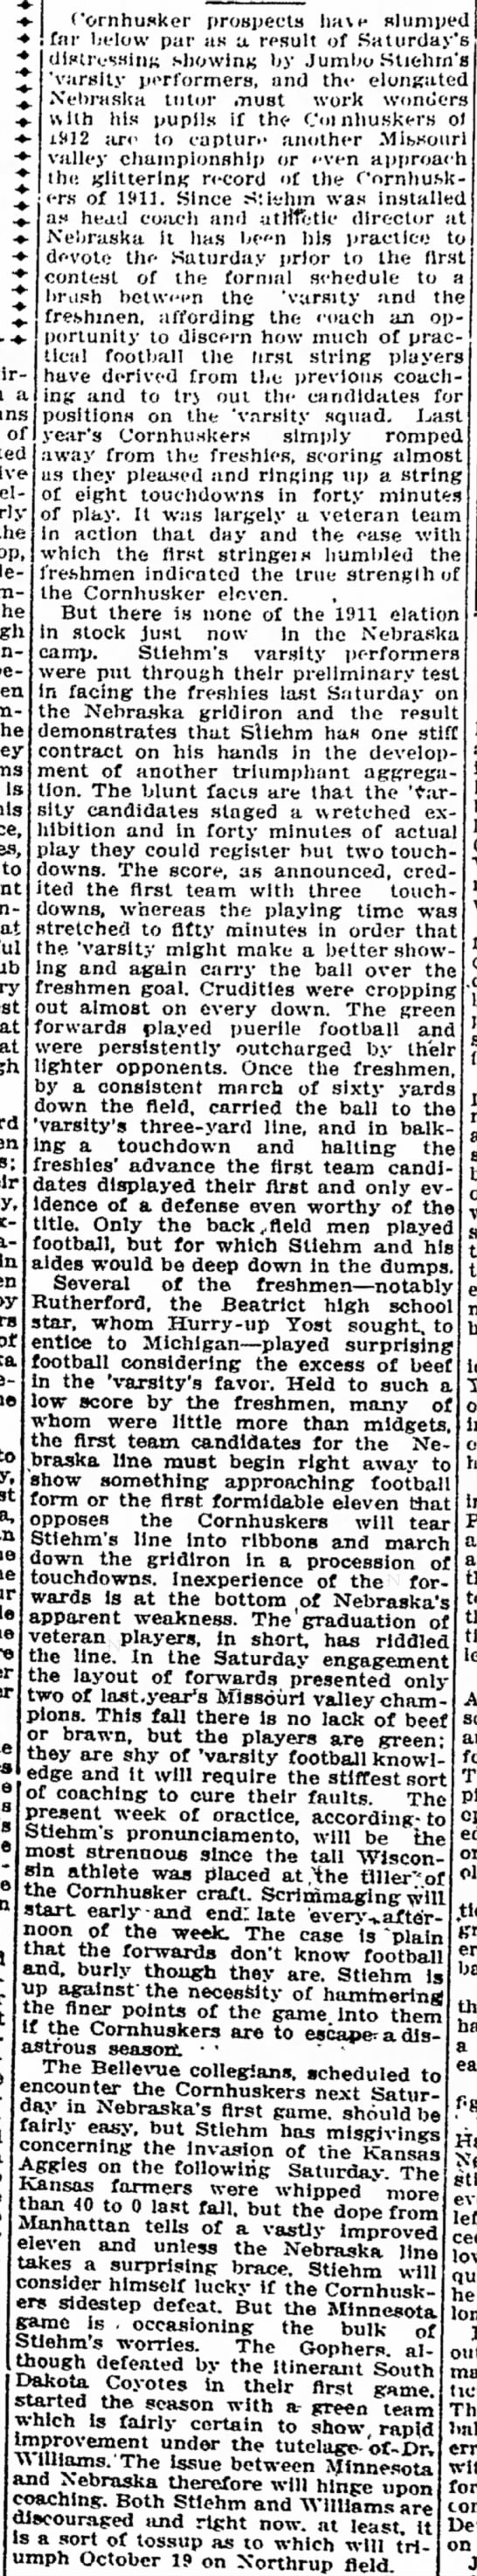 1912 varsity-freshmen scrimmage - 